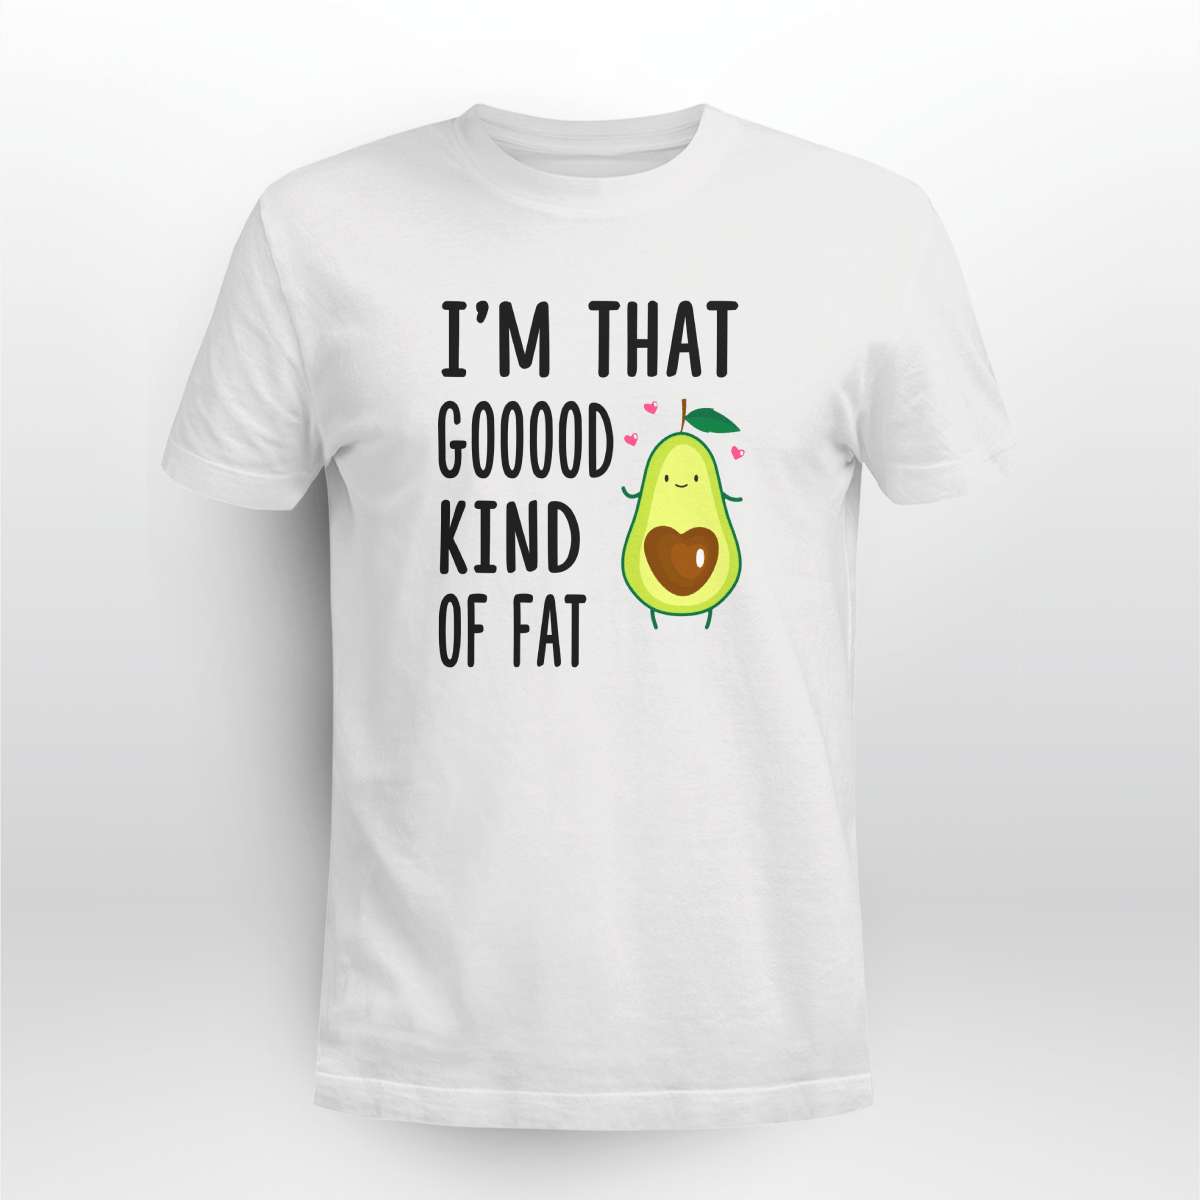 I'm that goood kind of fat - Good fat avocado, vegetable fats